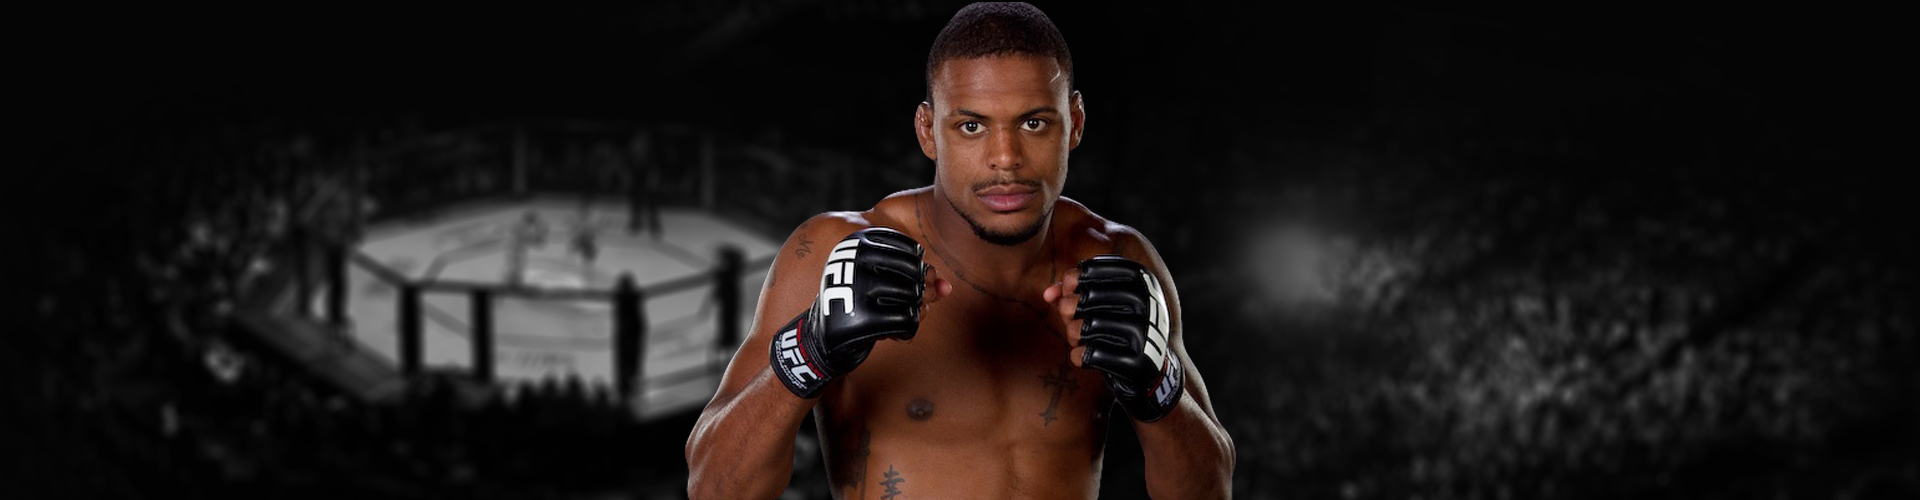 Michael Johnson in UFC fighting pose